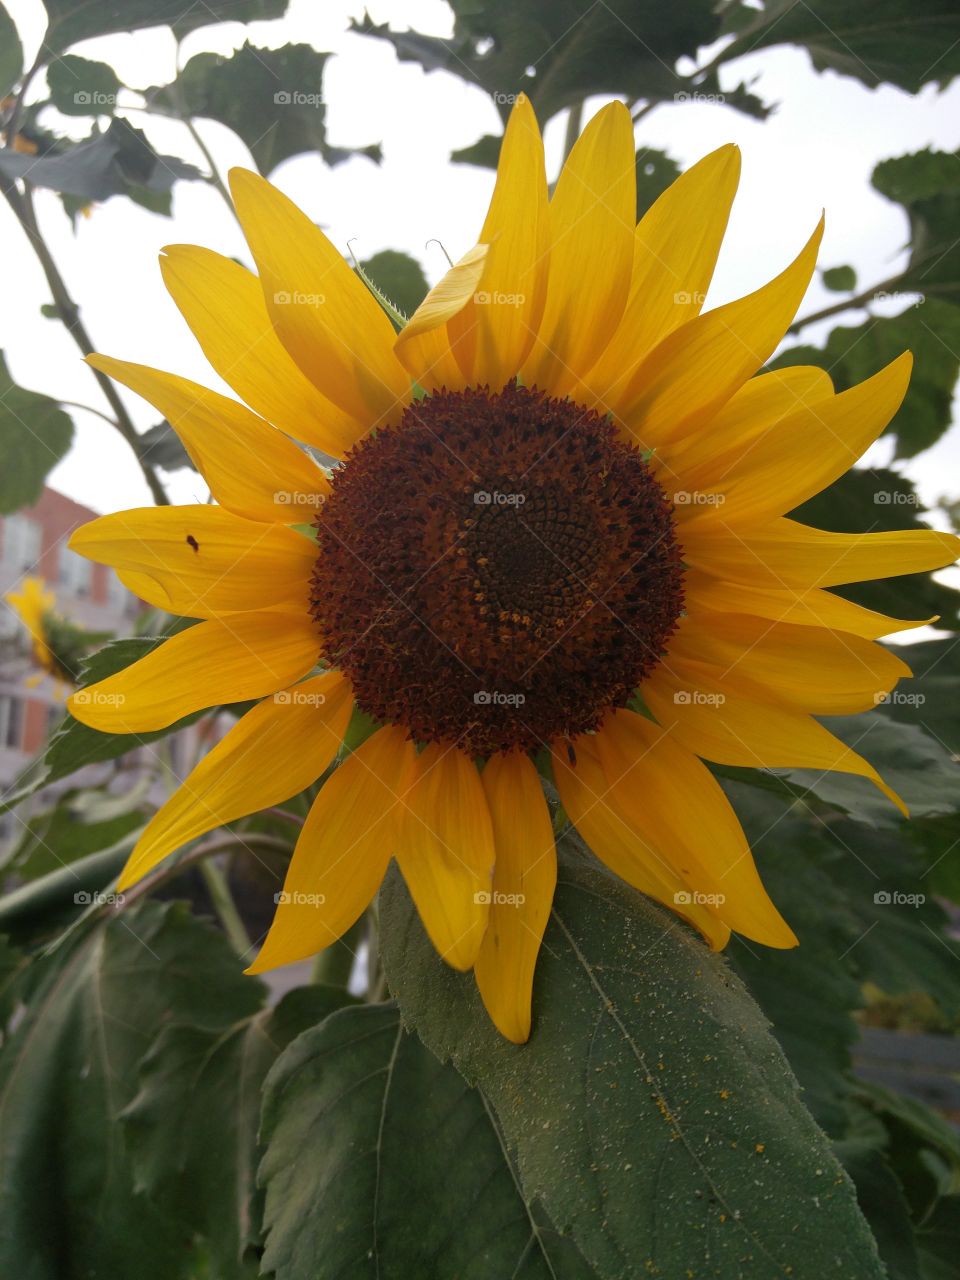 Buzzing around a sunflower